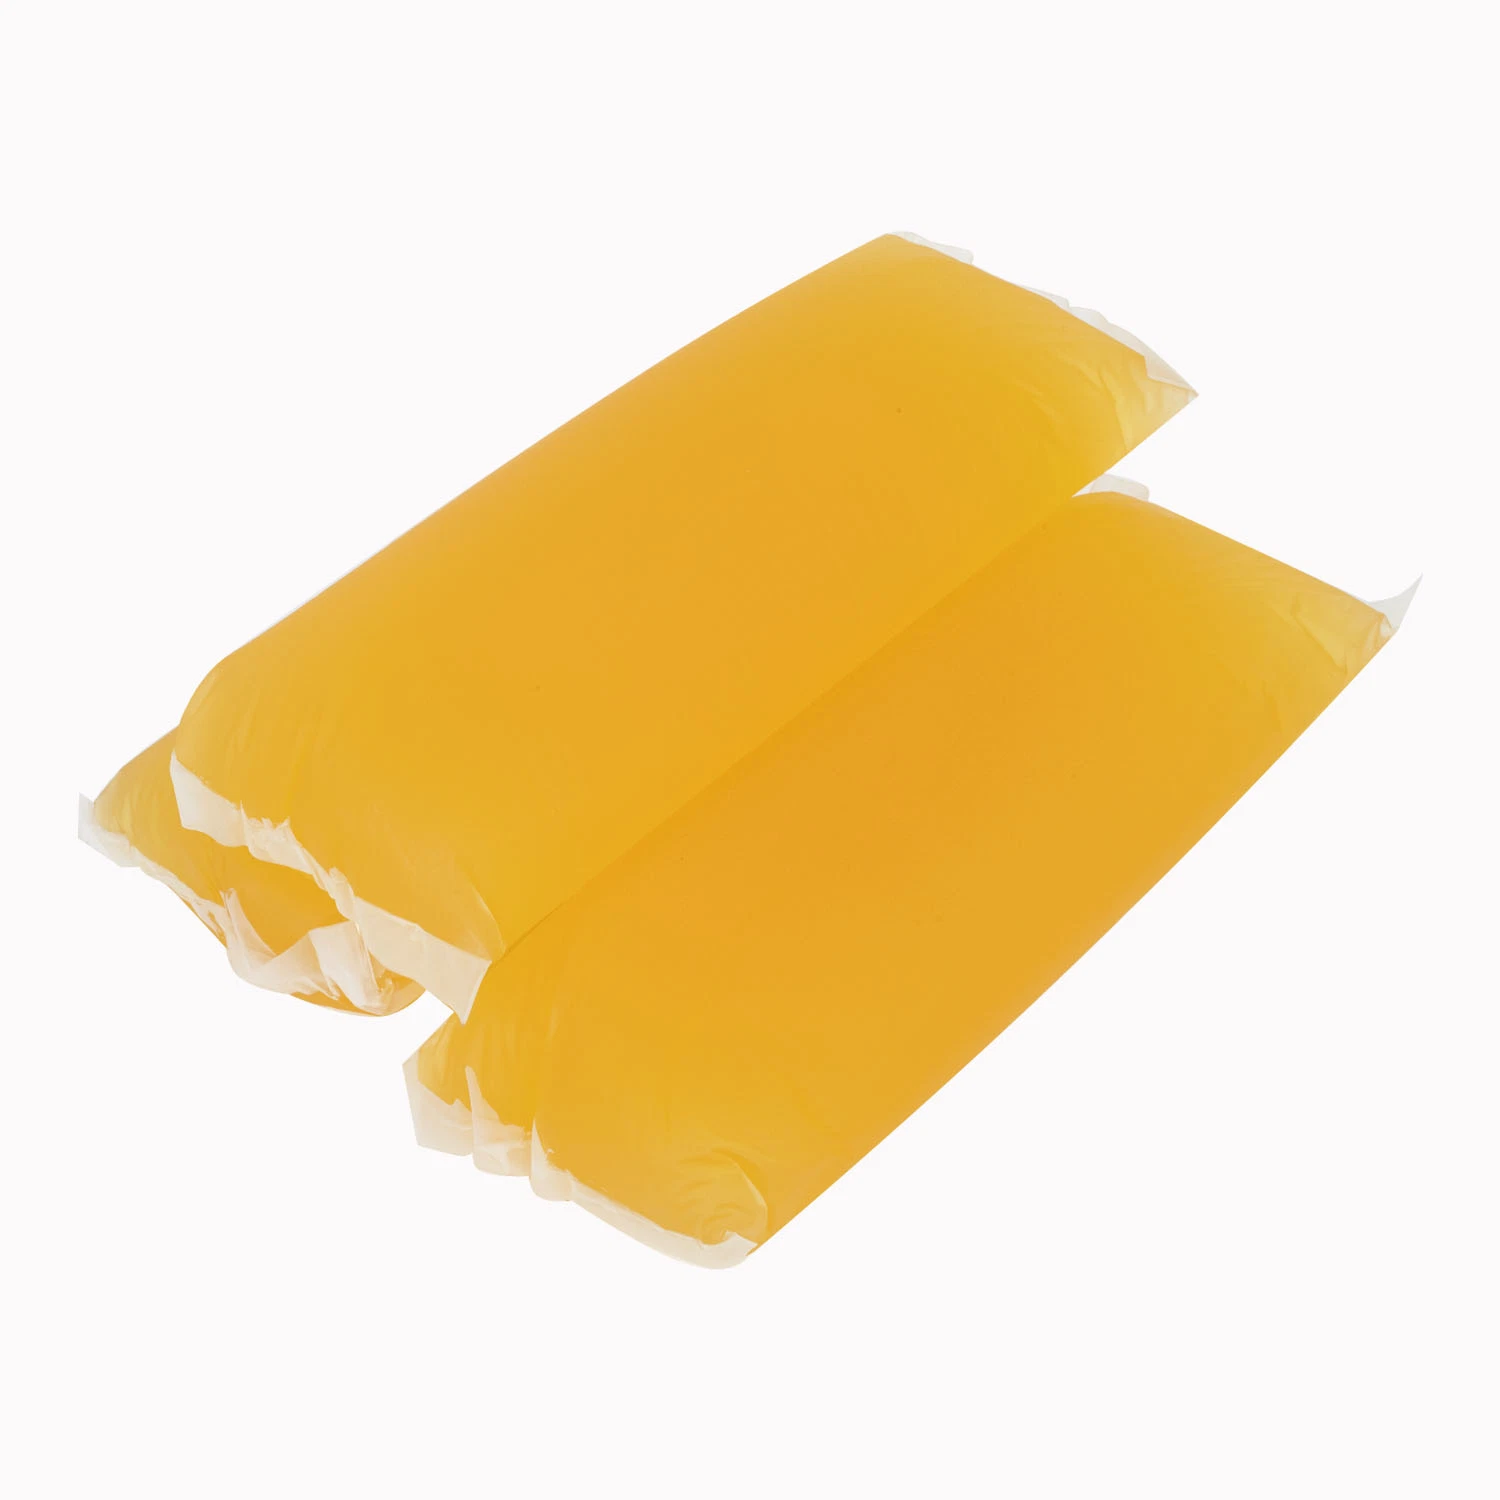 Construction Application of Diaper and Sanitary Napkin Hot Melt Adhesive